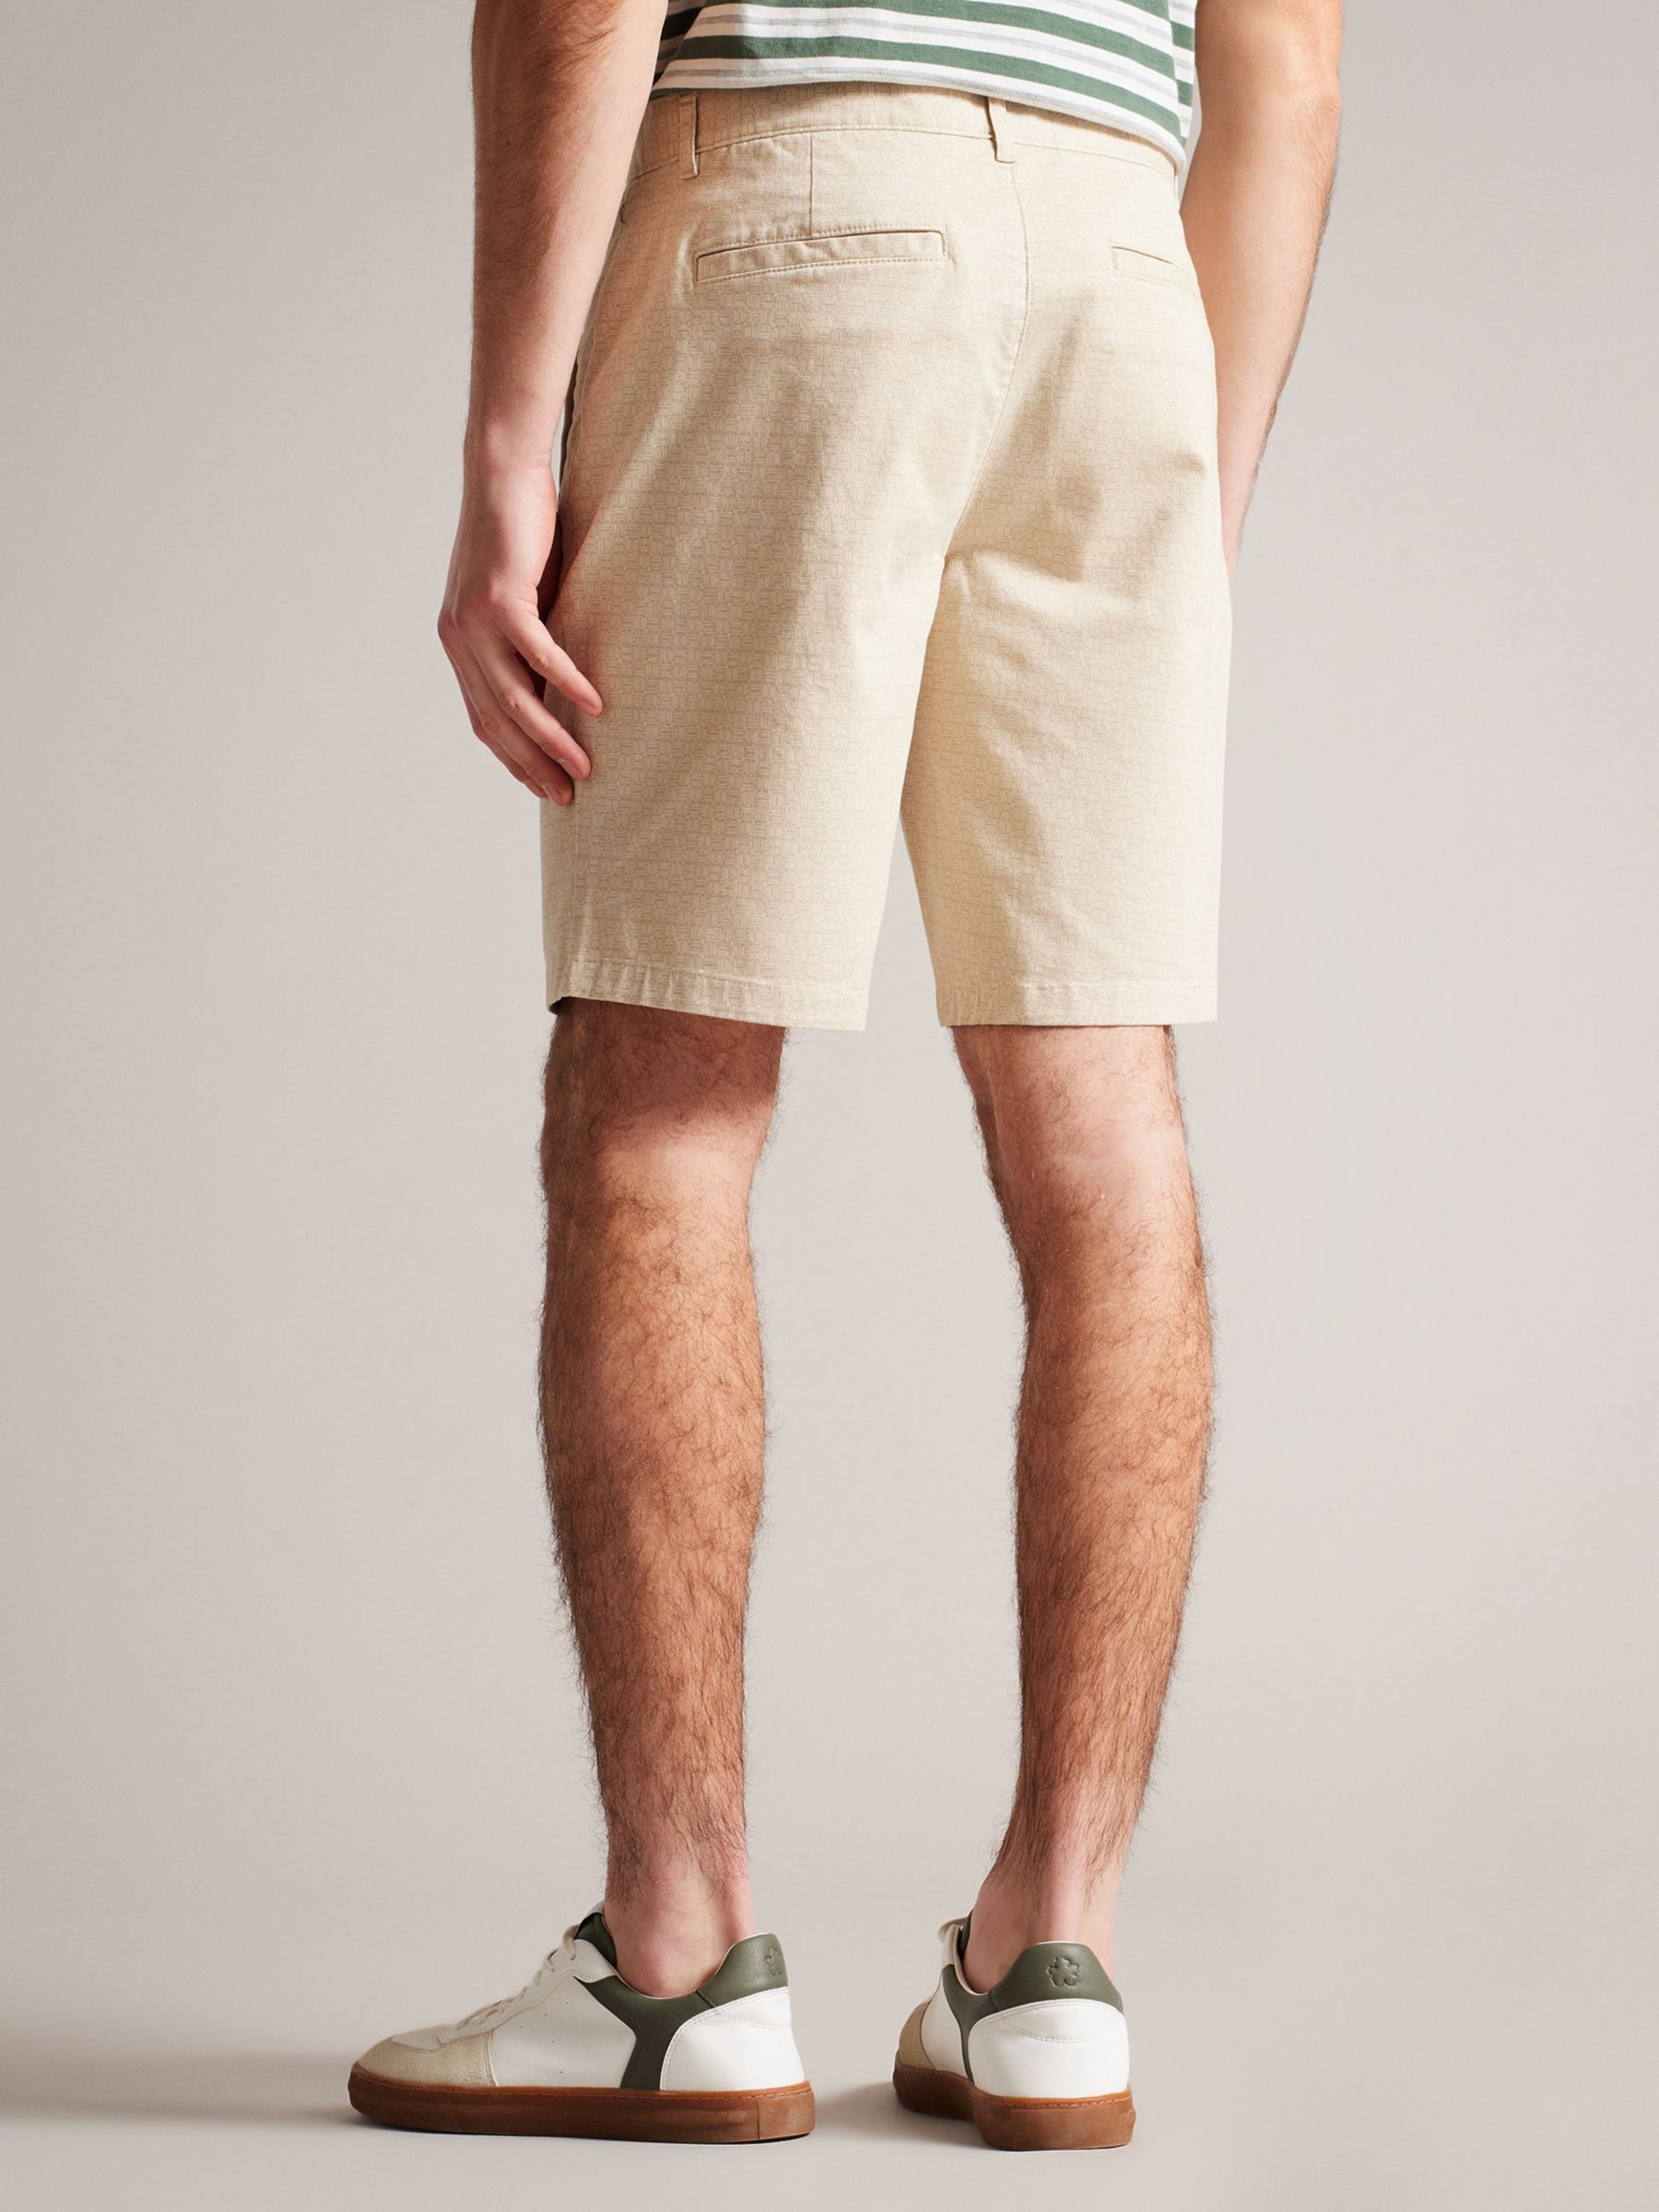 Ted Baker Gomer Regular Fit Geometric Shorts, Cream, 28R